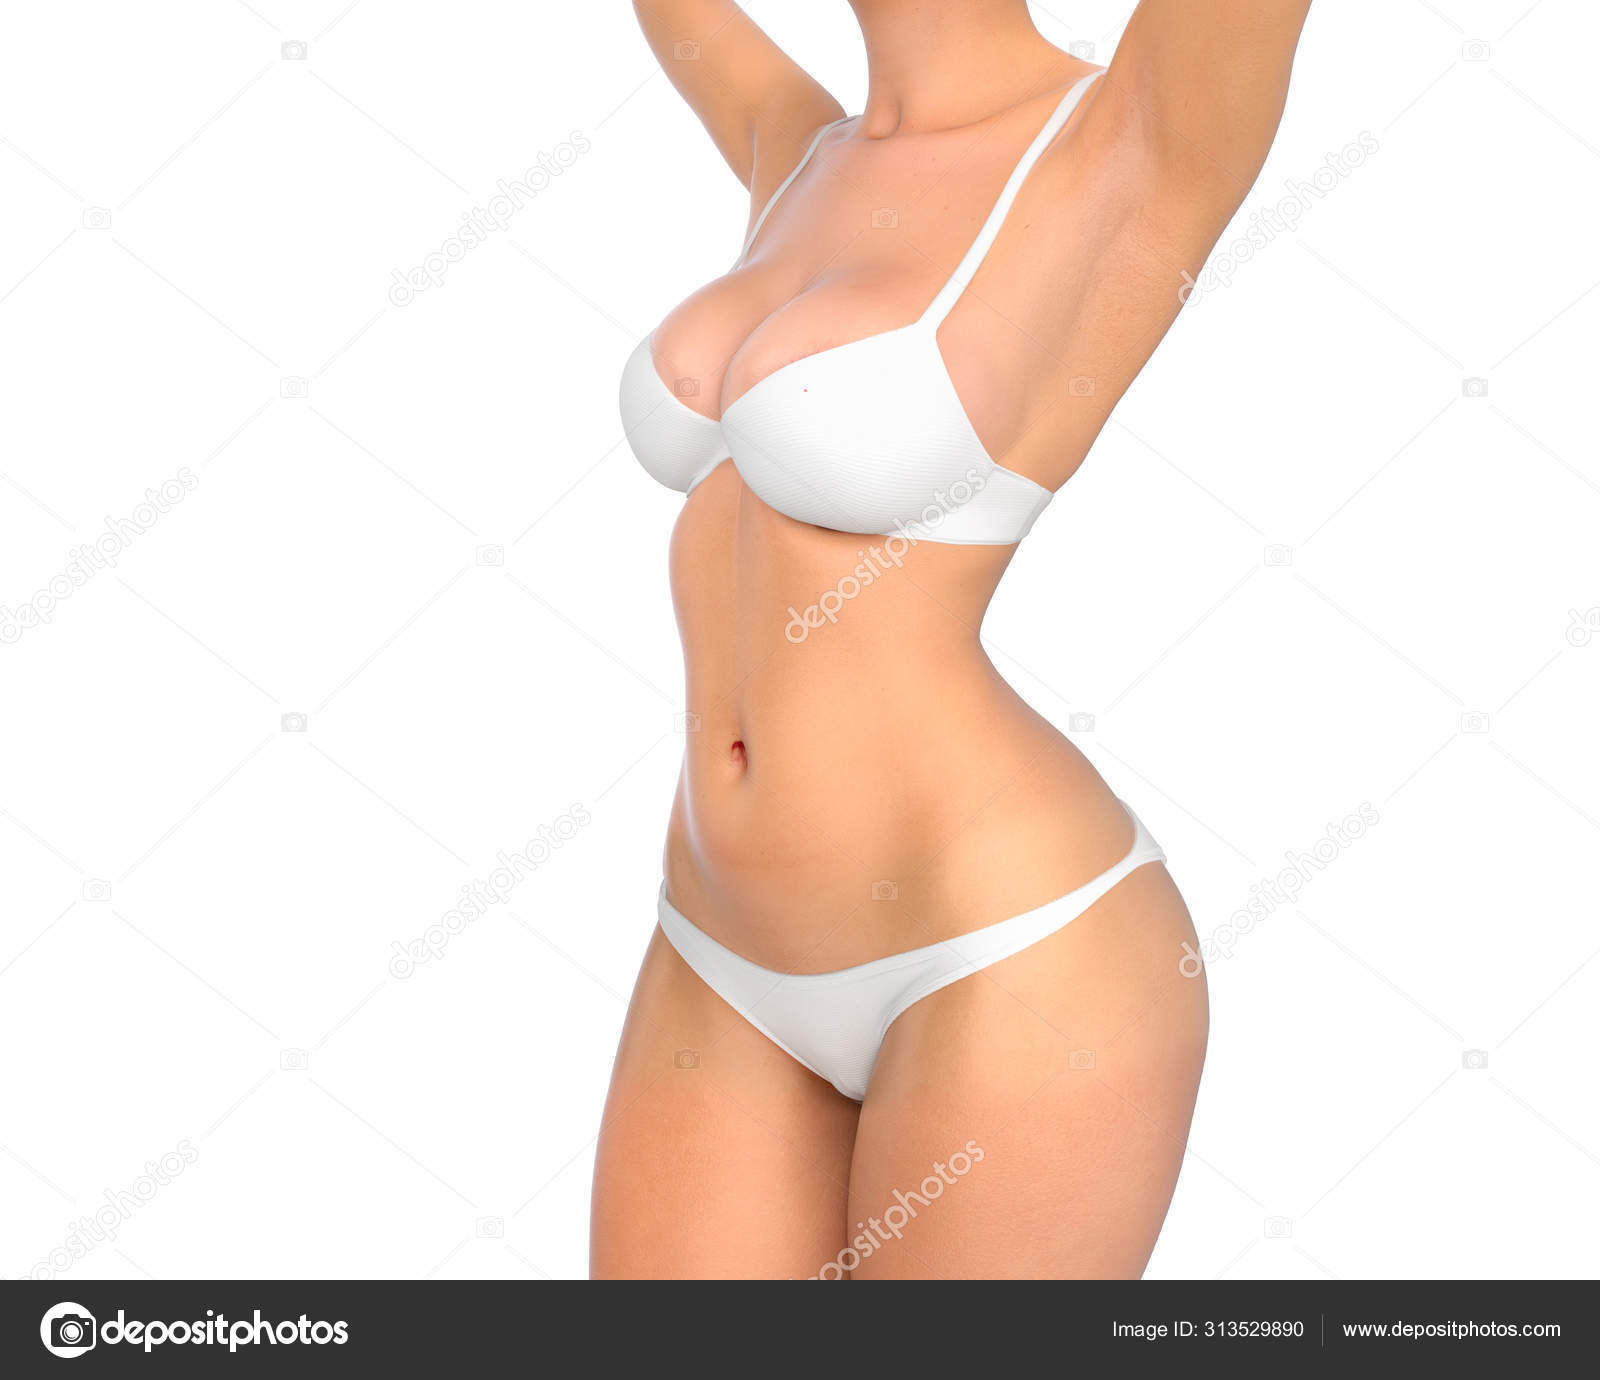 https://st4.depositphotos.com/4475215/31352/i/1600/depositphotos_313529890-stock-photo-perfect-body-of-slim-fit.jpg